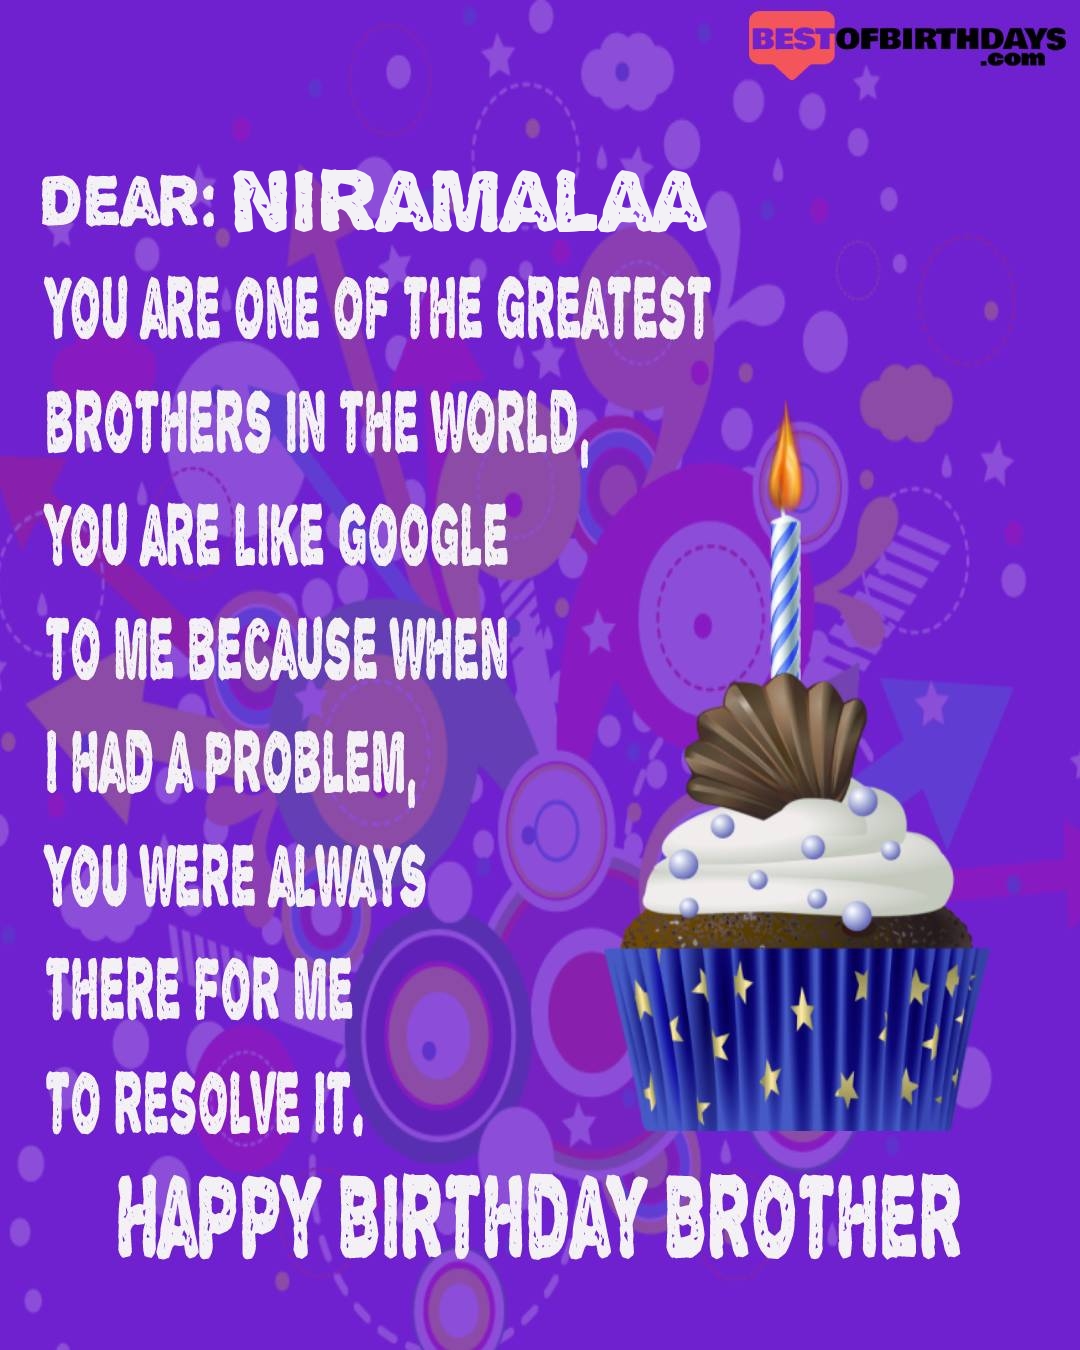 Happy birthday niramalaa bhai brother bro